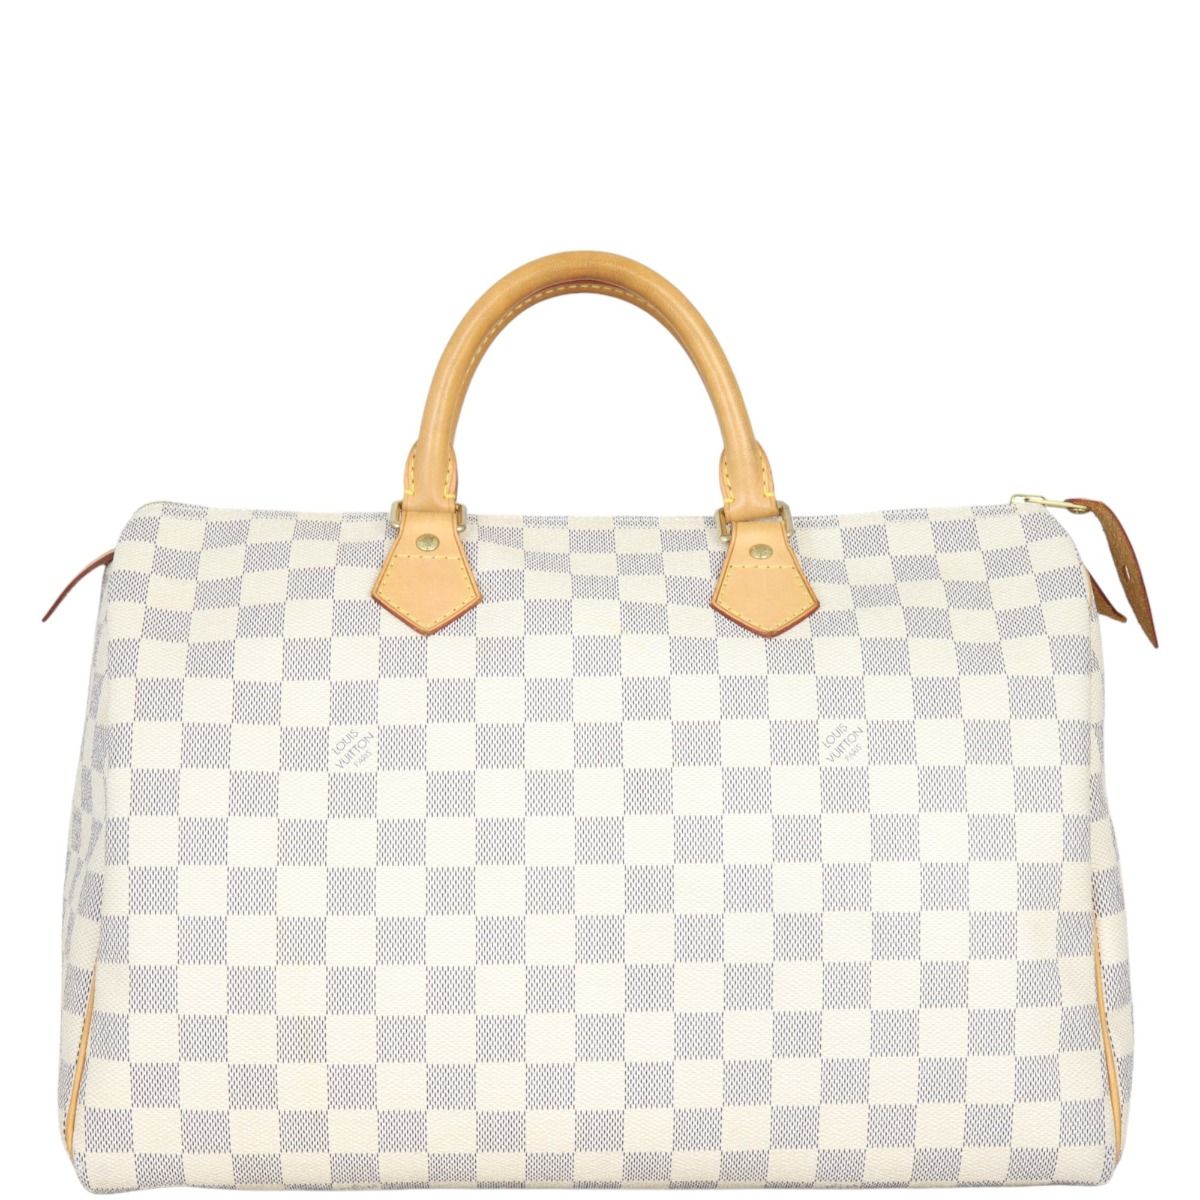 $1300 Louis Vuitton Damier Azur White Checker Speedy 30 Tote Bag